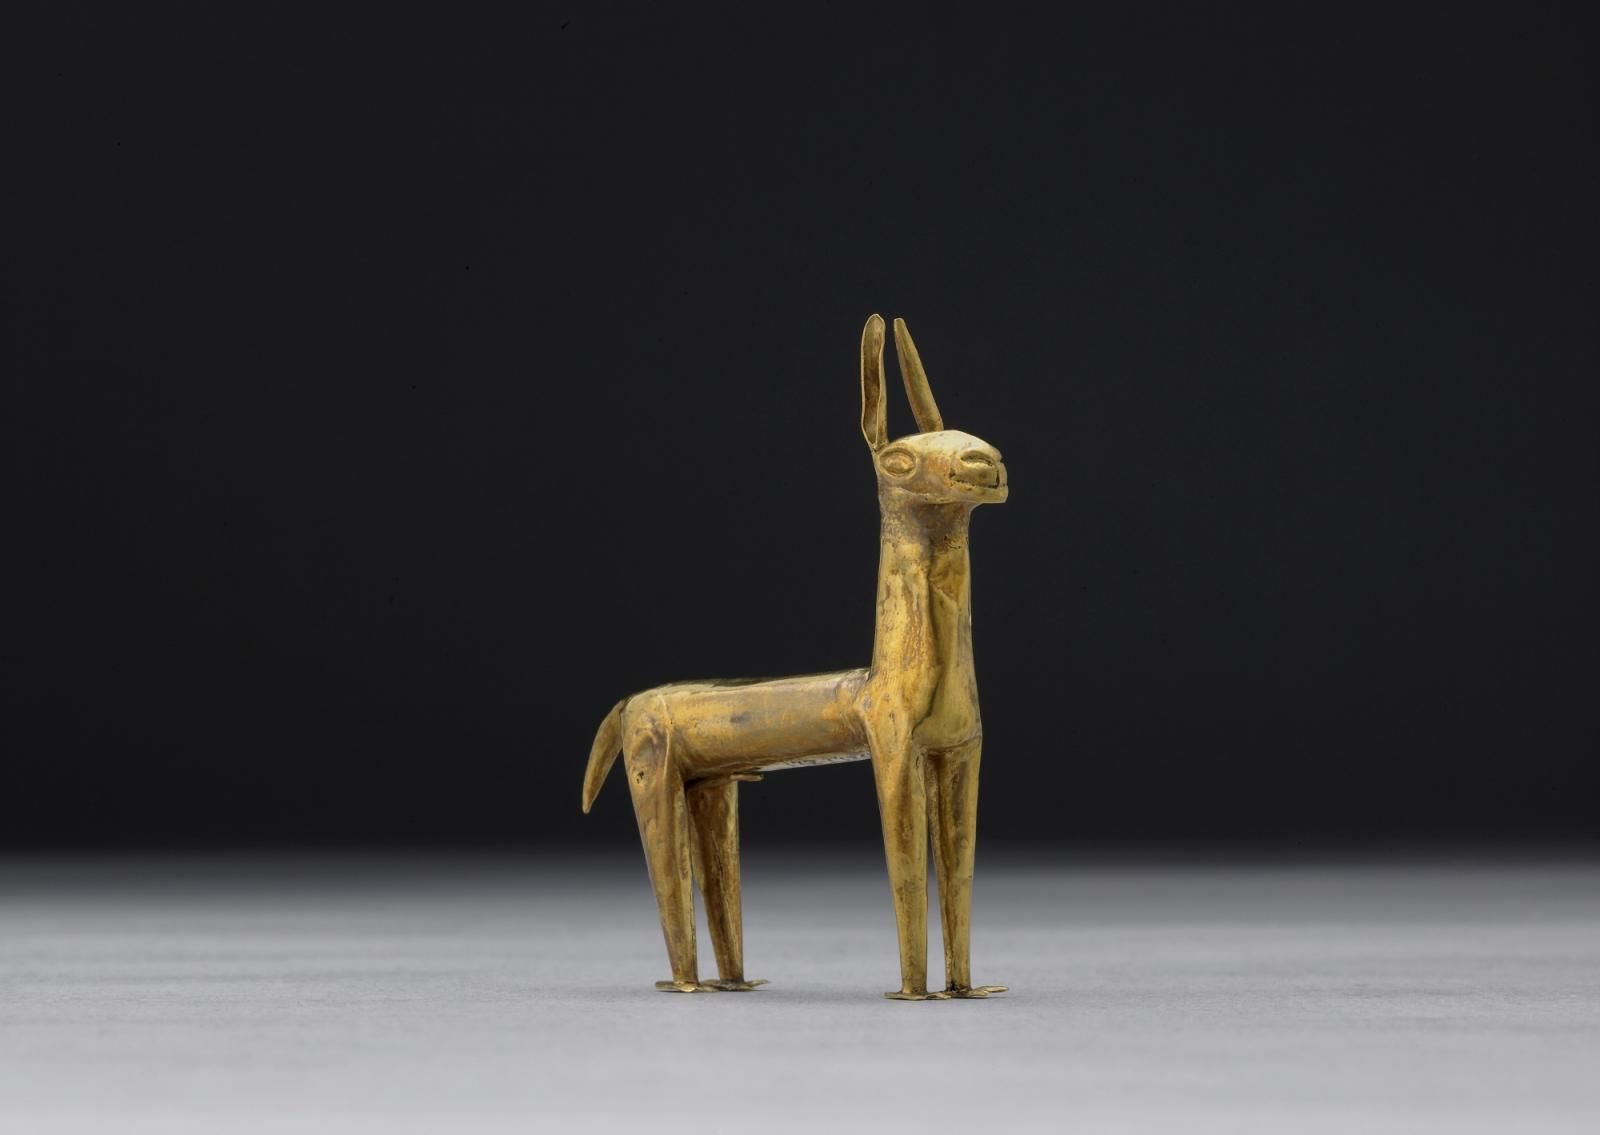 A mini gold llama